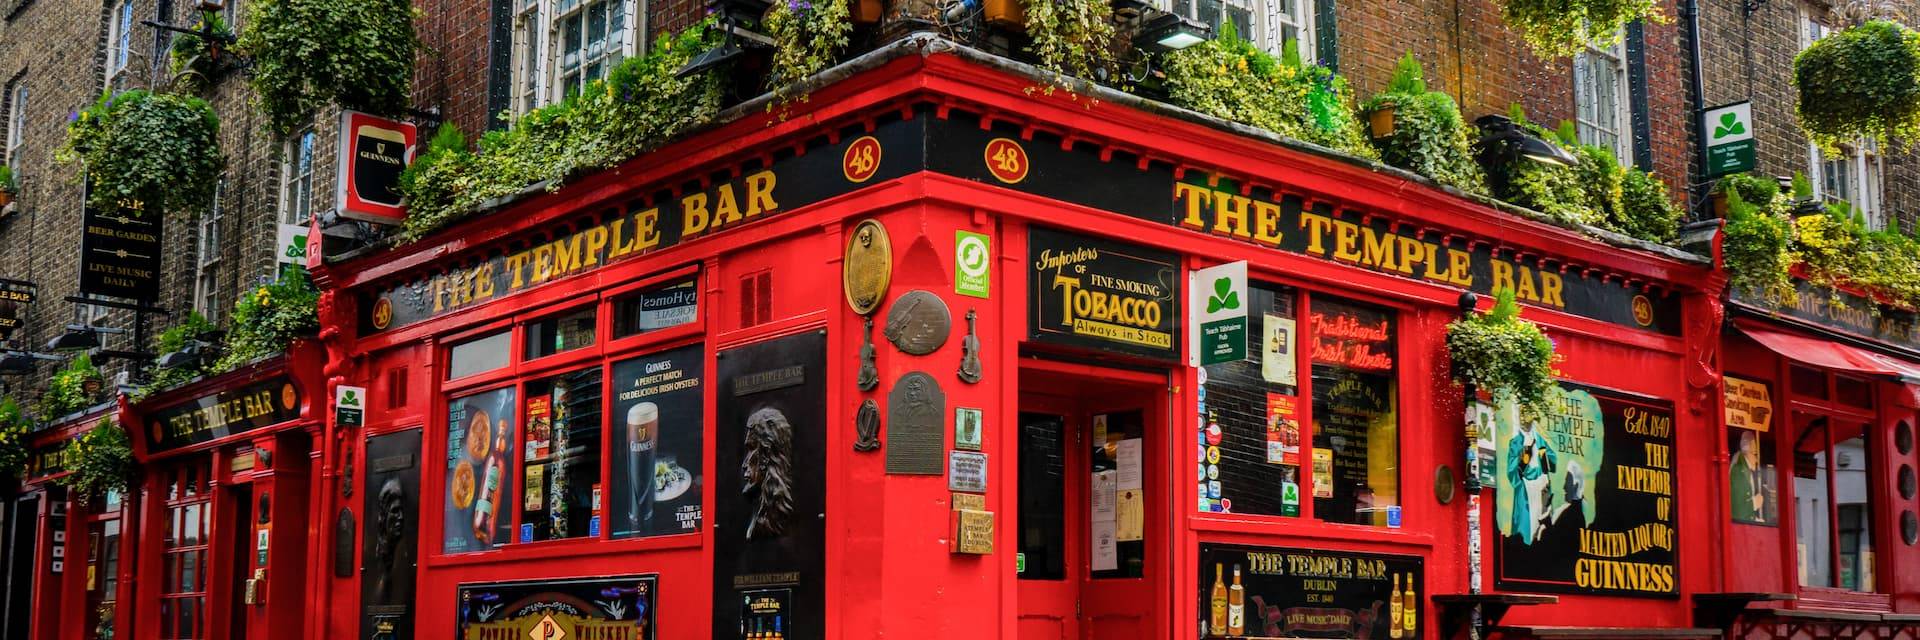 Tour Temple Bar, recorrido e historia de los pubs irlandeses